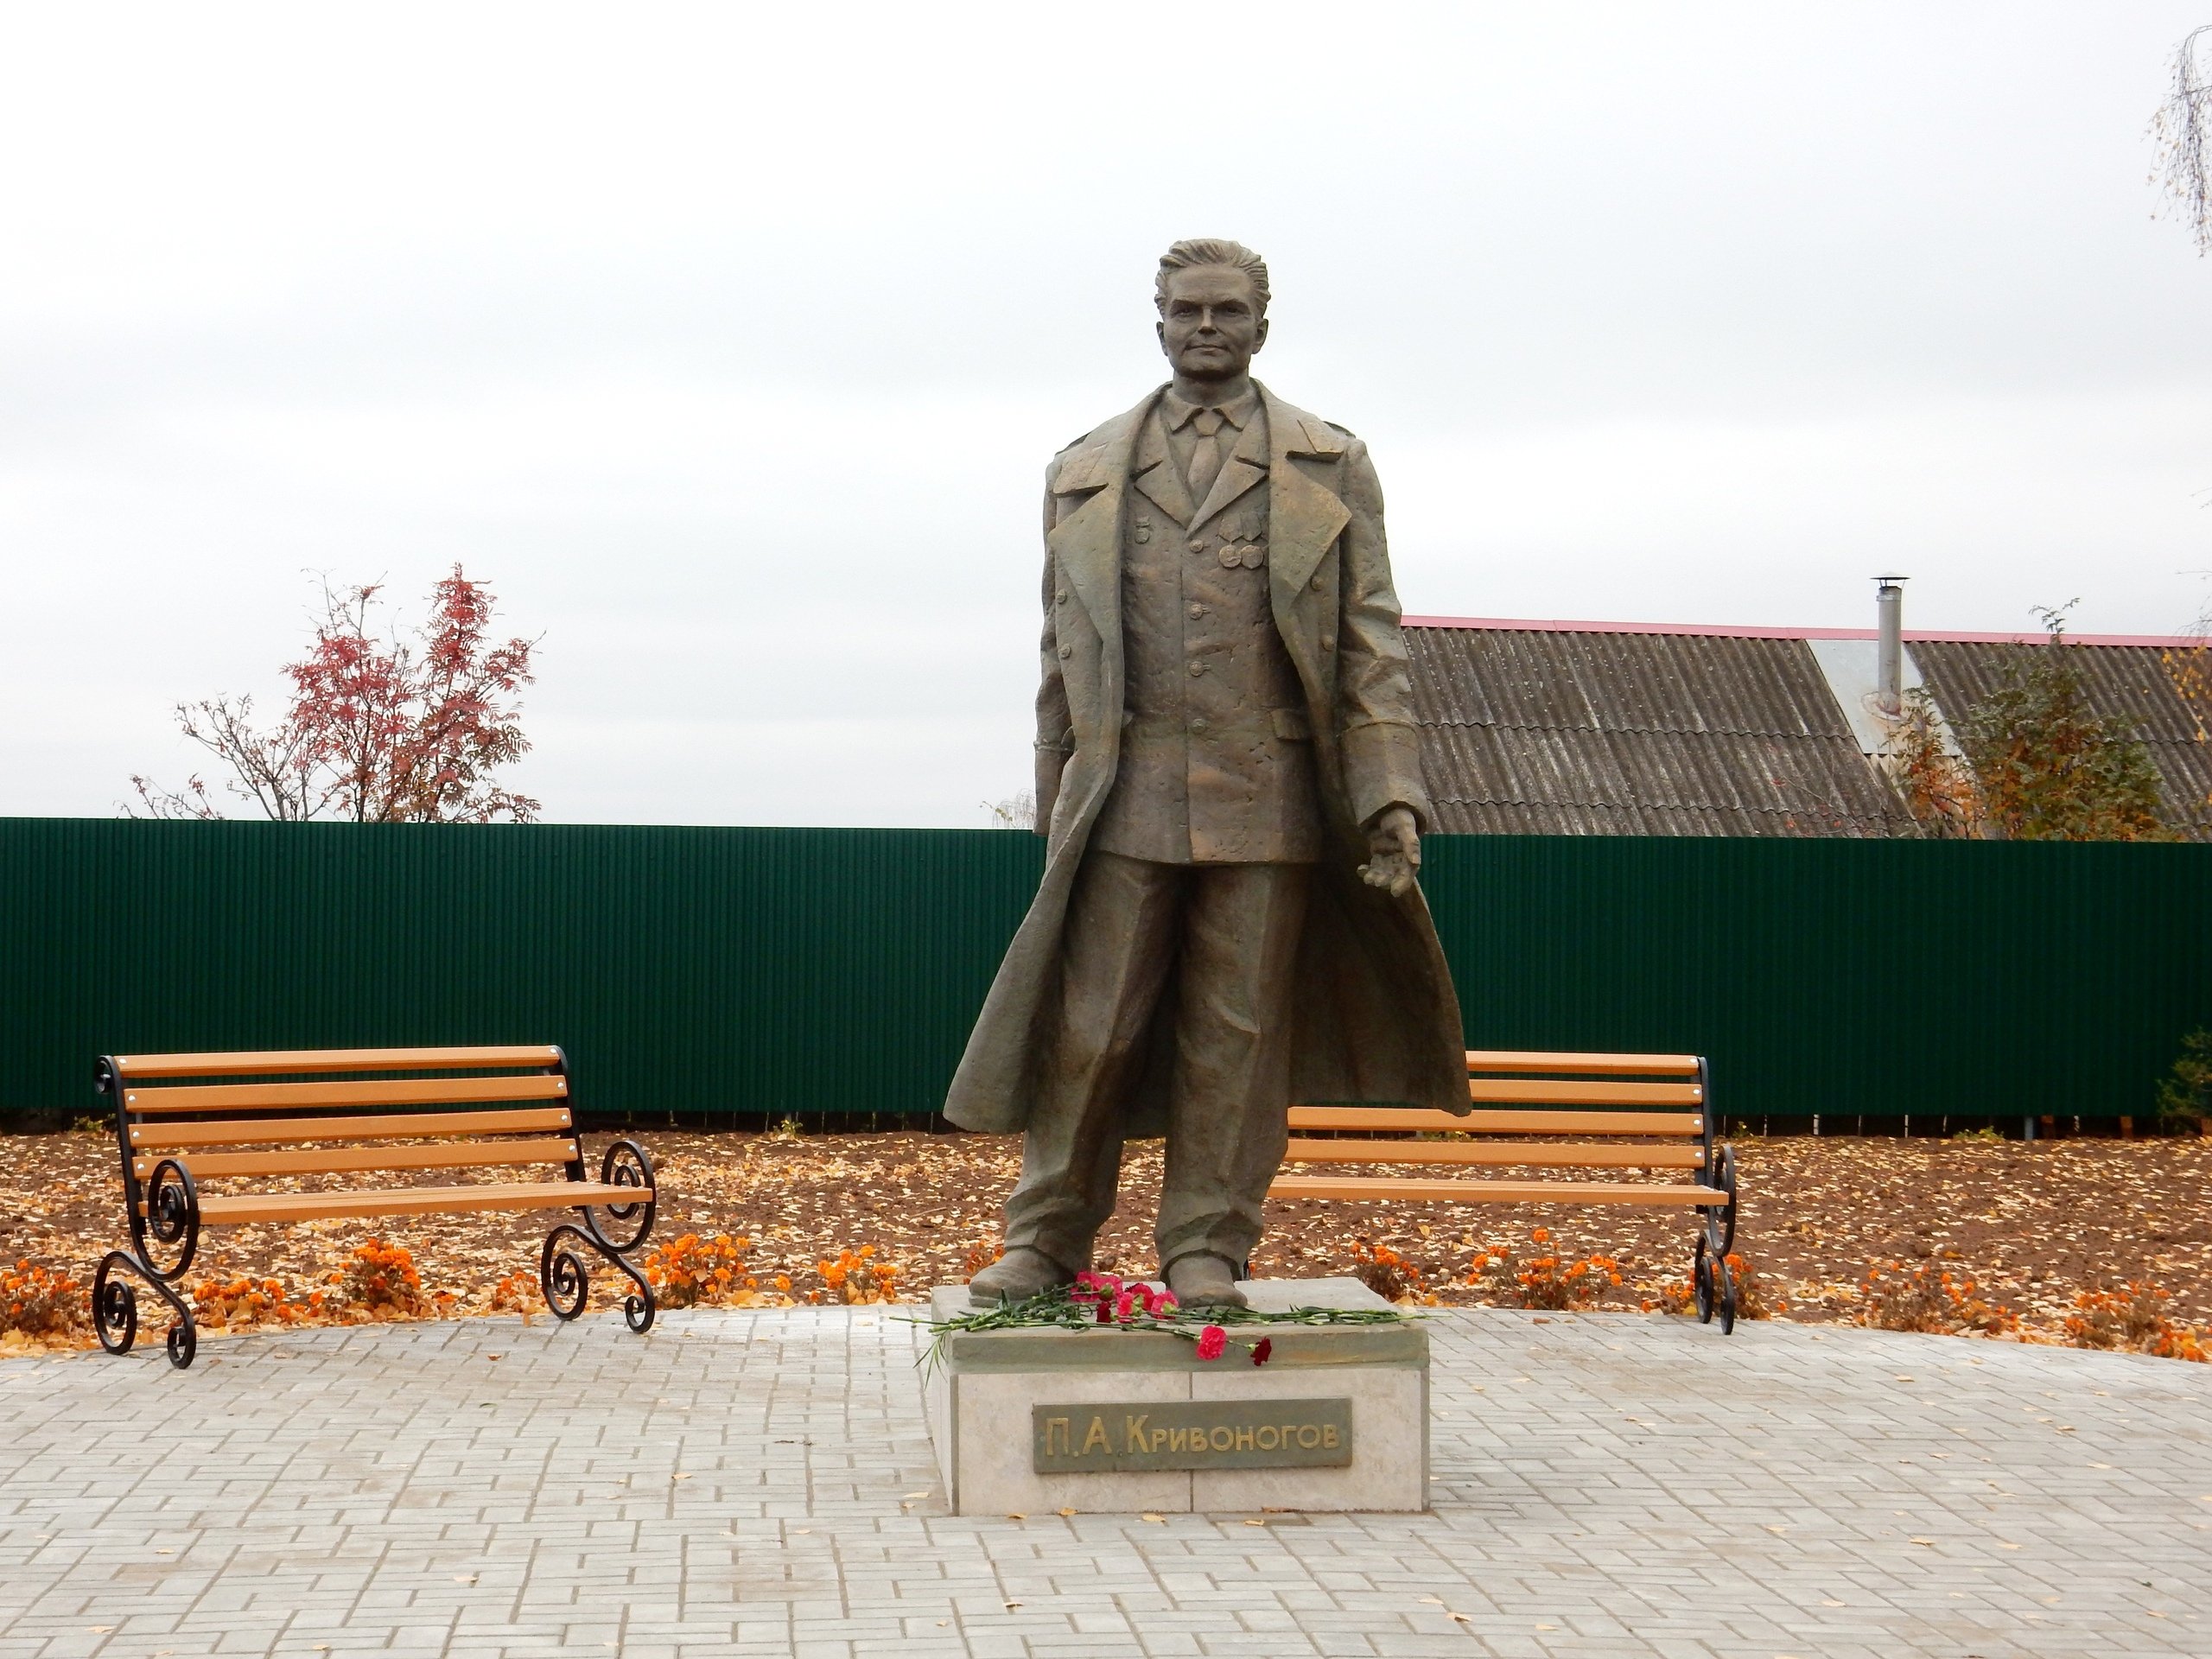 В Киясово появился памятник живописцу-баталисту Петру Кривоногову